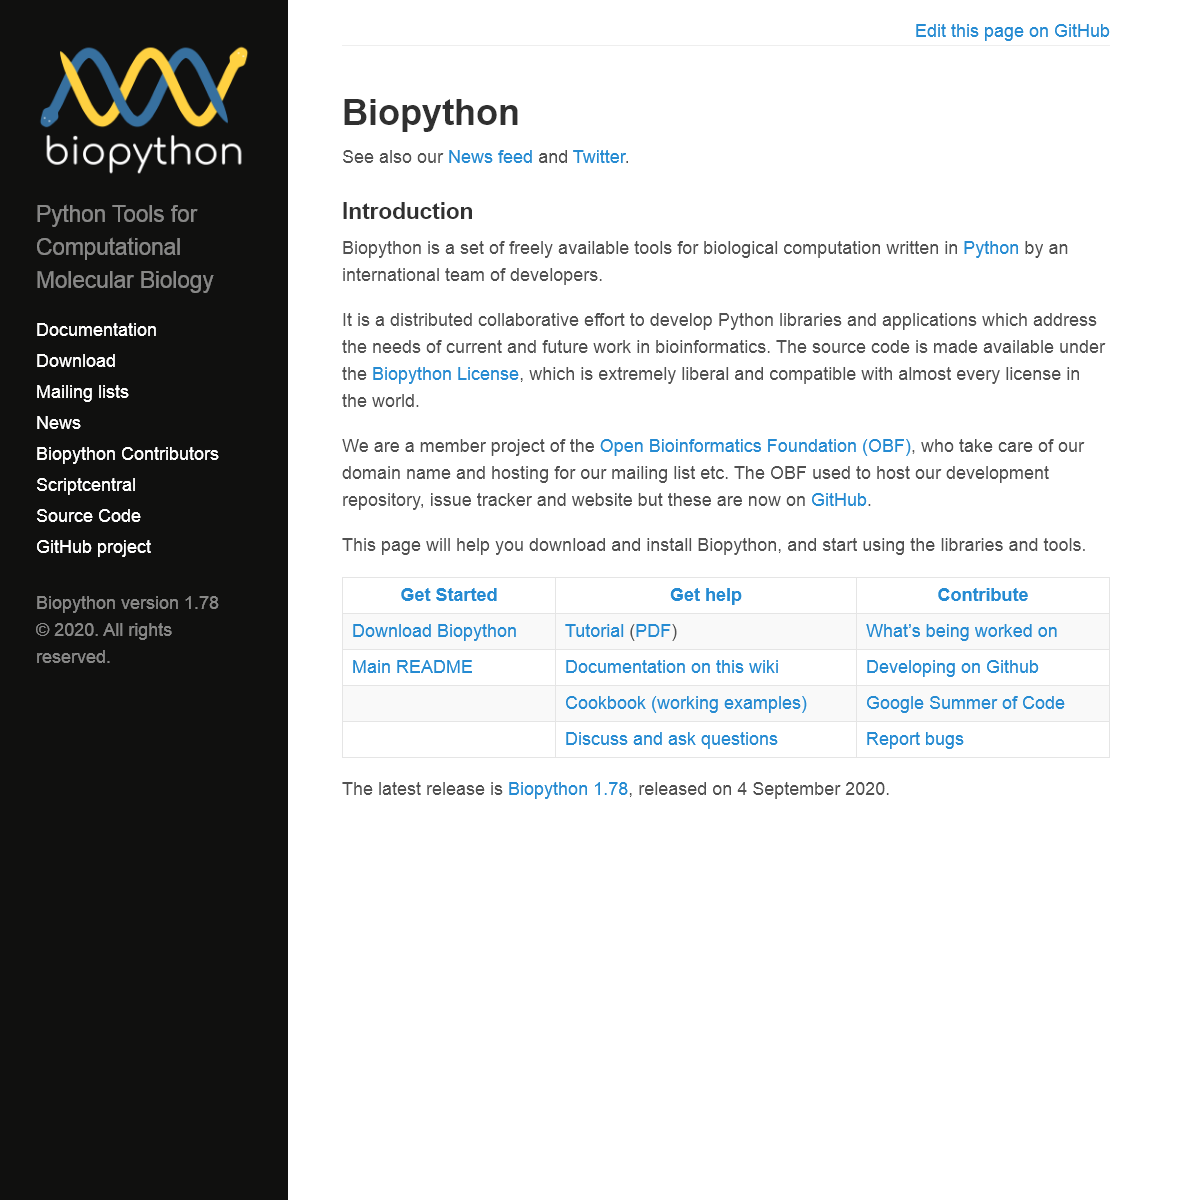 A complete backup of biopython.org